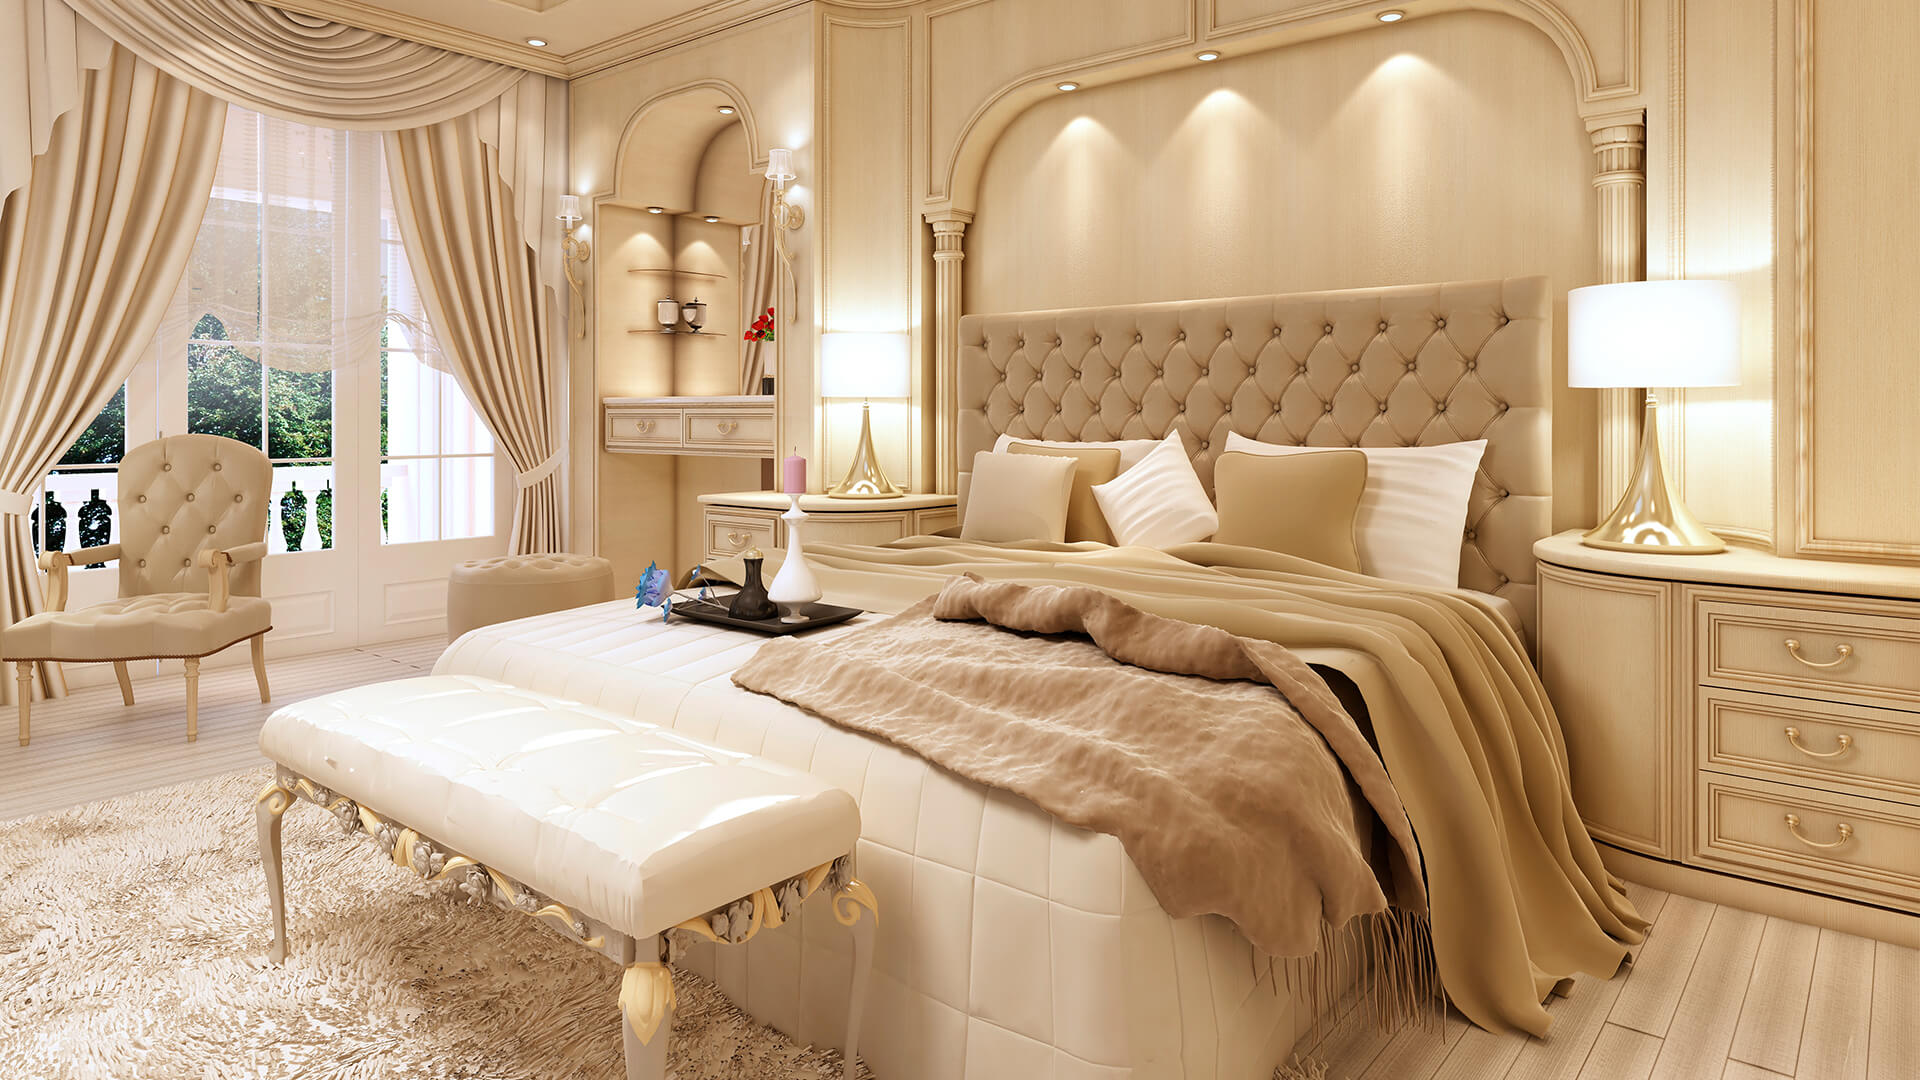 5 star hotel bed mattress